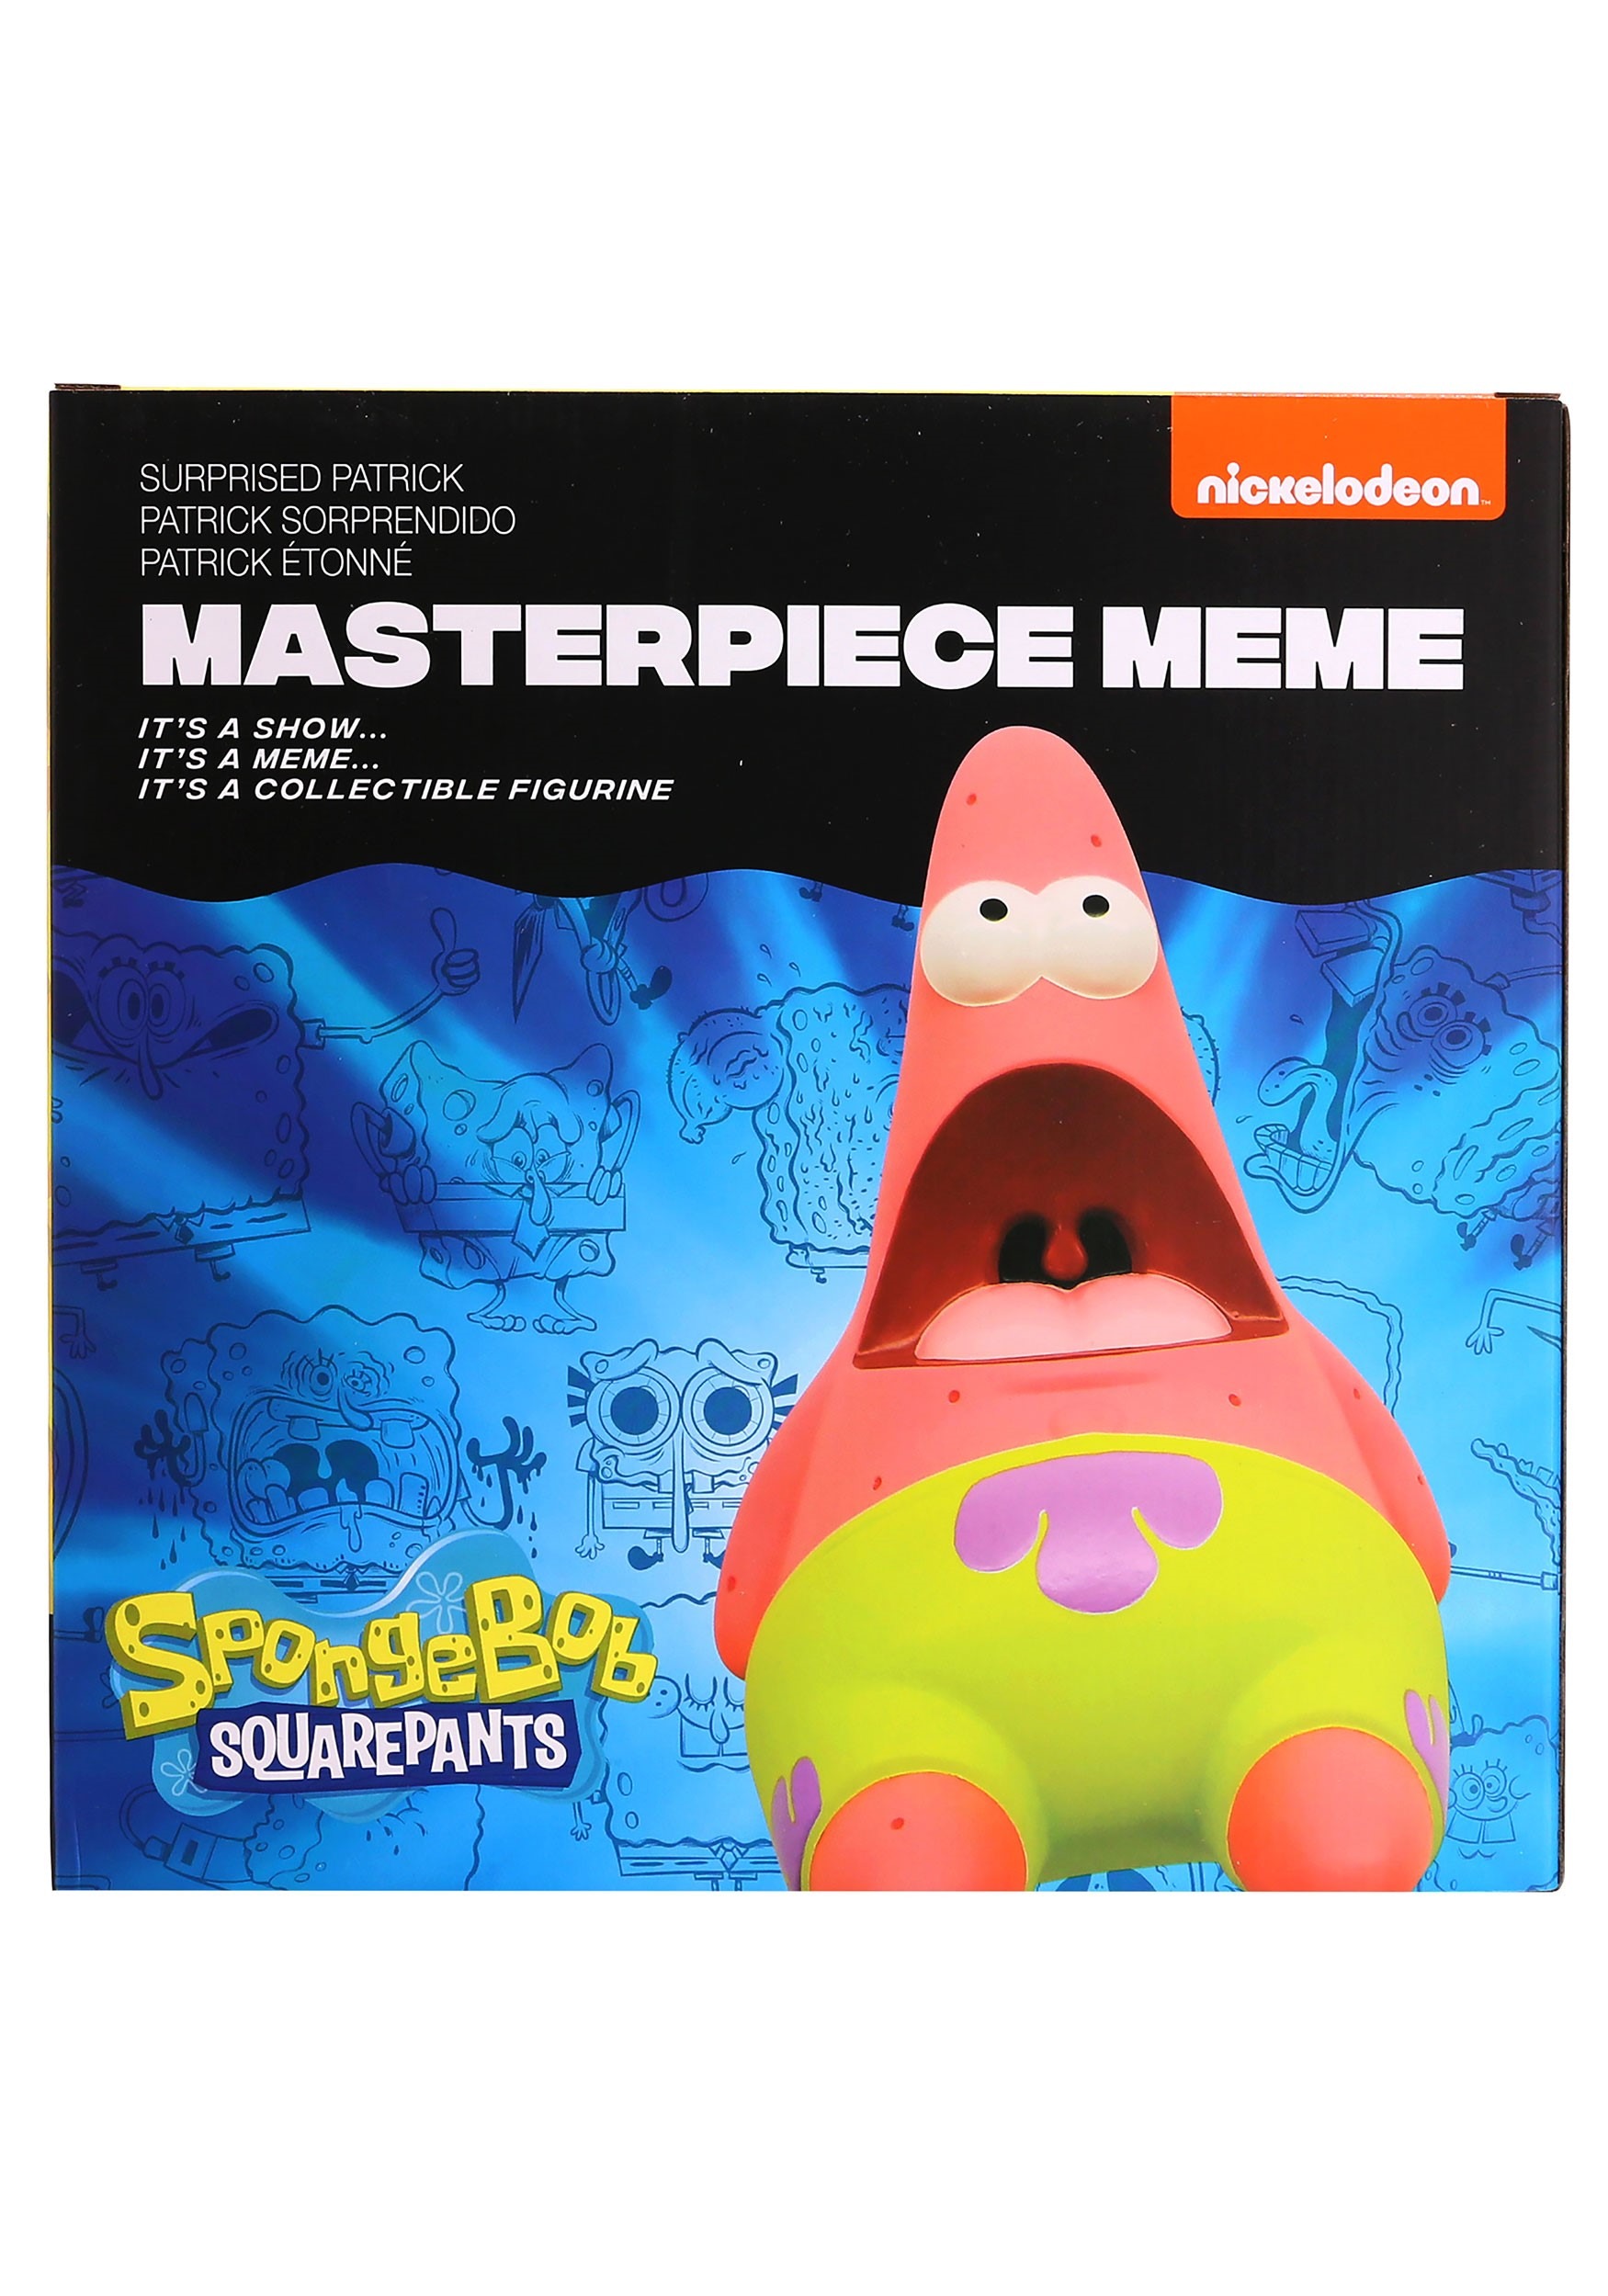 Funny Spongebob Masterpiece Memes Collection Surprised Patrick